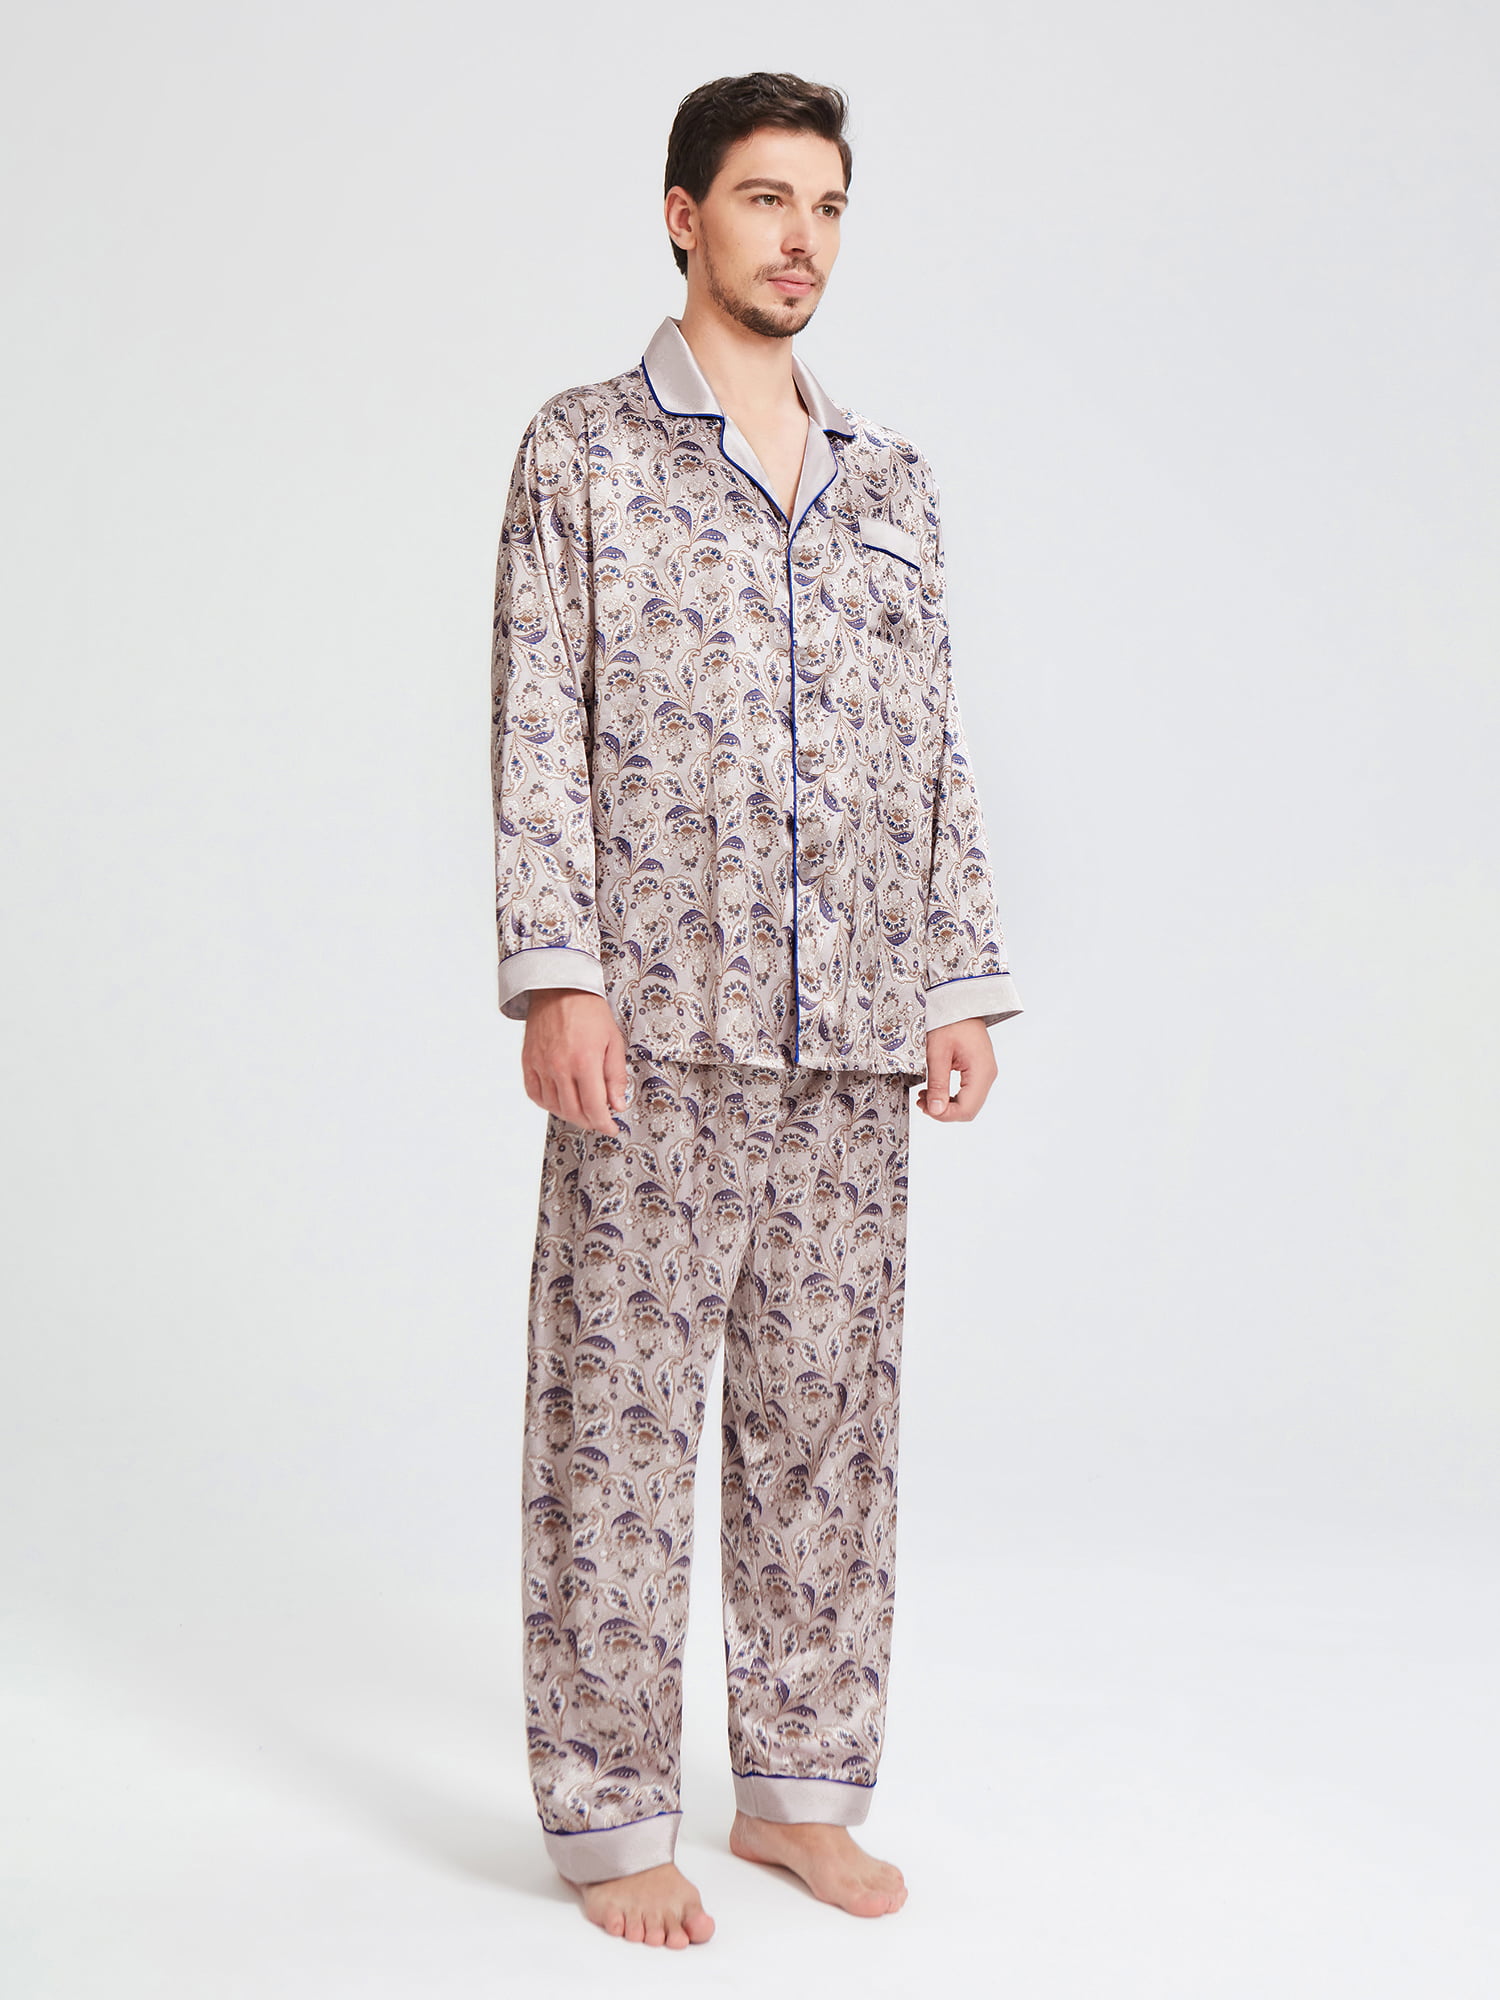 QWZNDZGR Pajamas Men Home Wear Suit Silk Satin Sleepwear Long sleeve Pajama  Sets Trendyol Sleep Tops Pants Large size Loungewear 